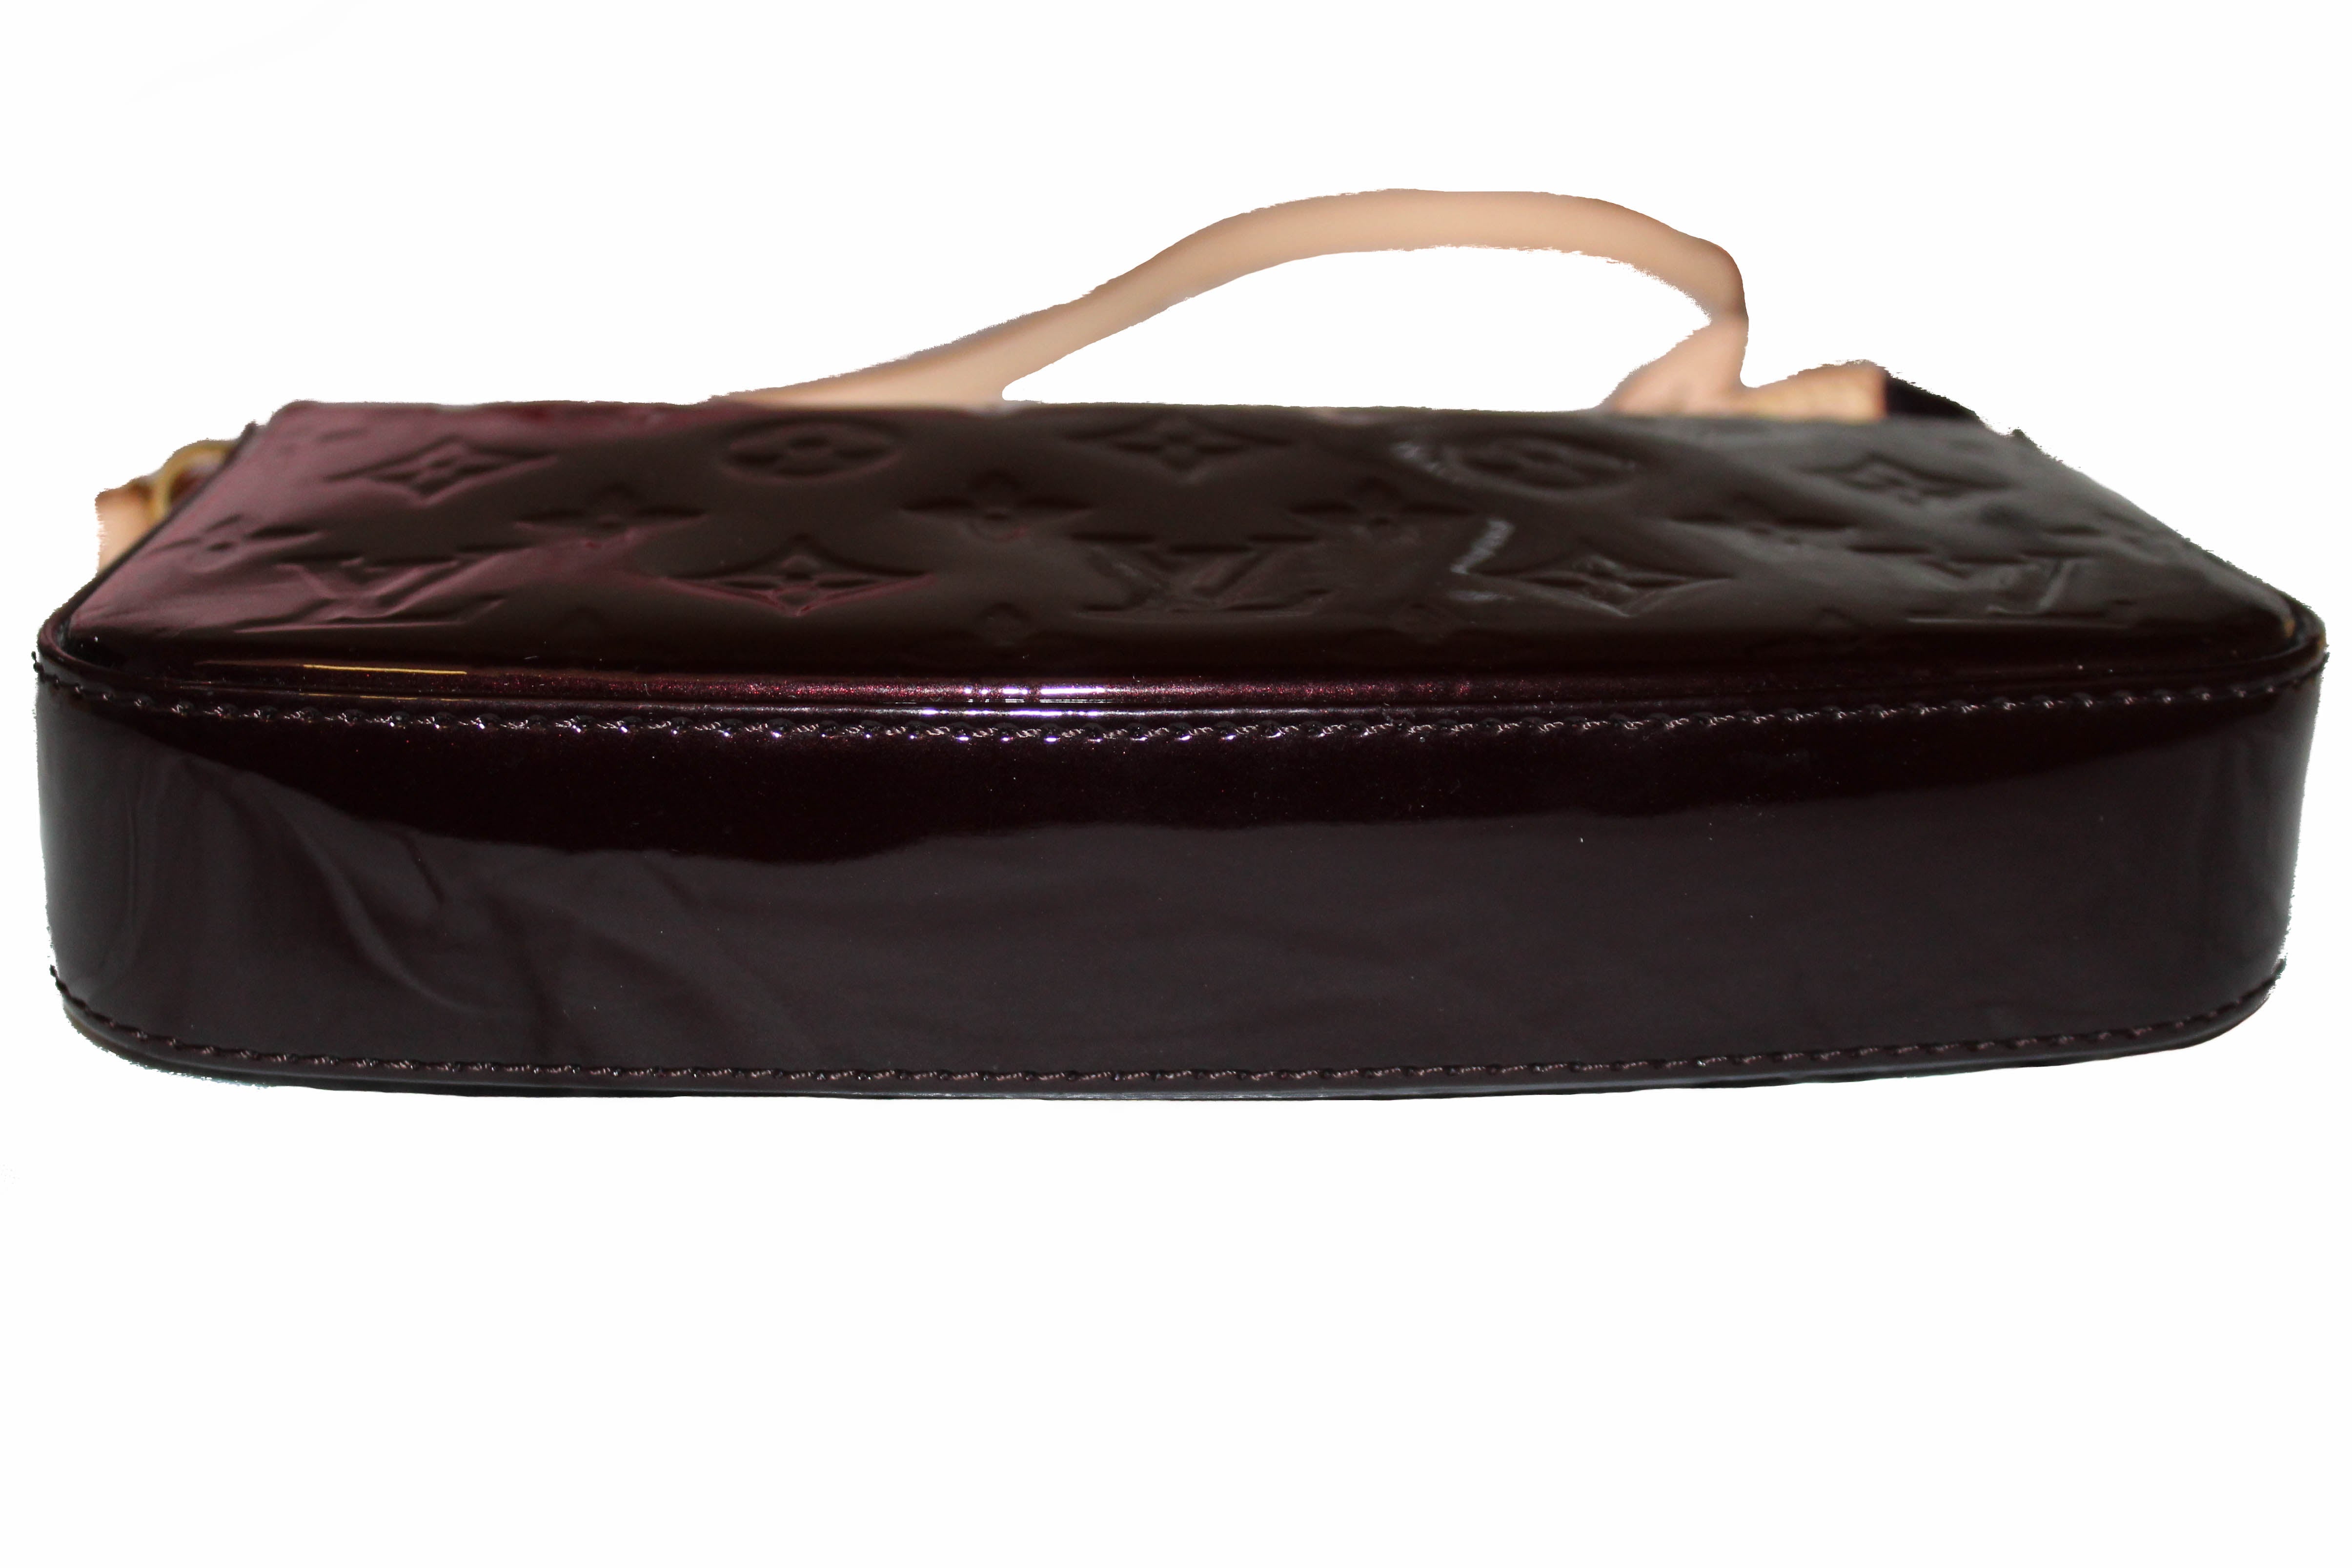 Authentic Louis Vuitton Vernis Crossbody Bag LV, Luxury, Bags